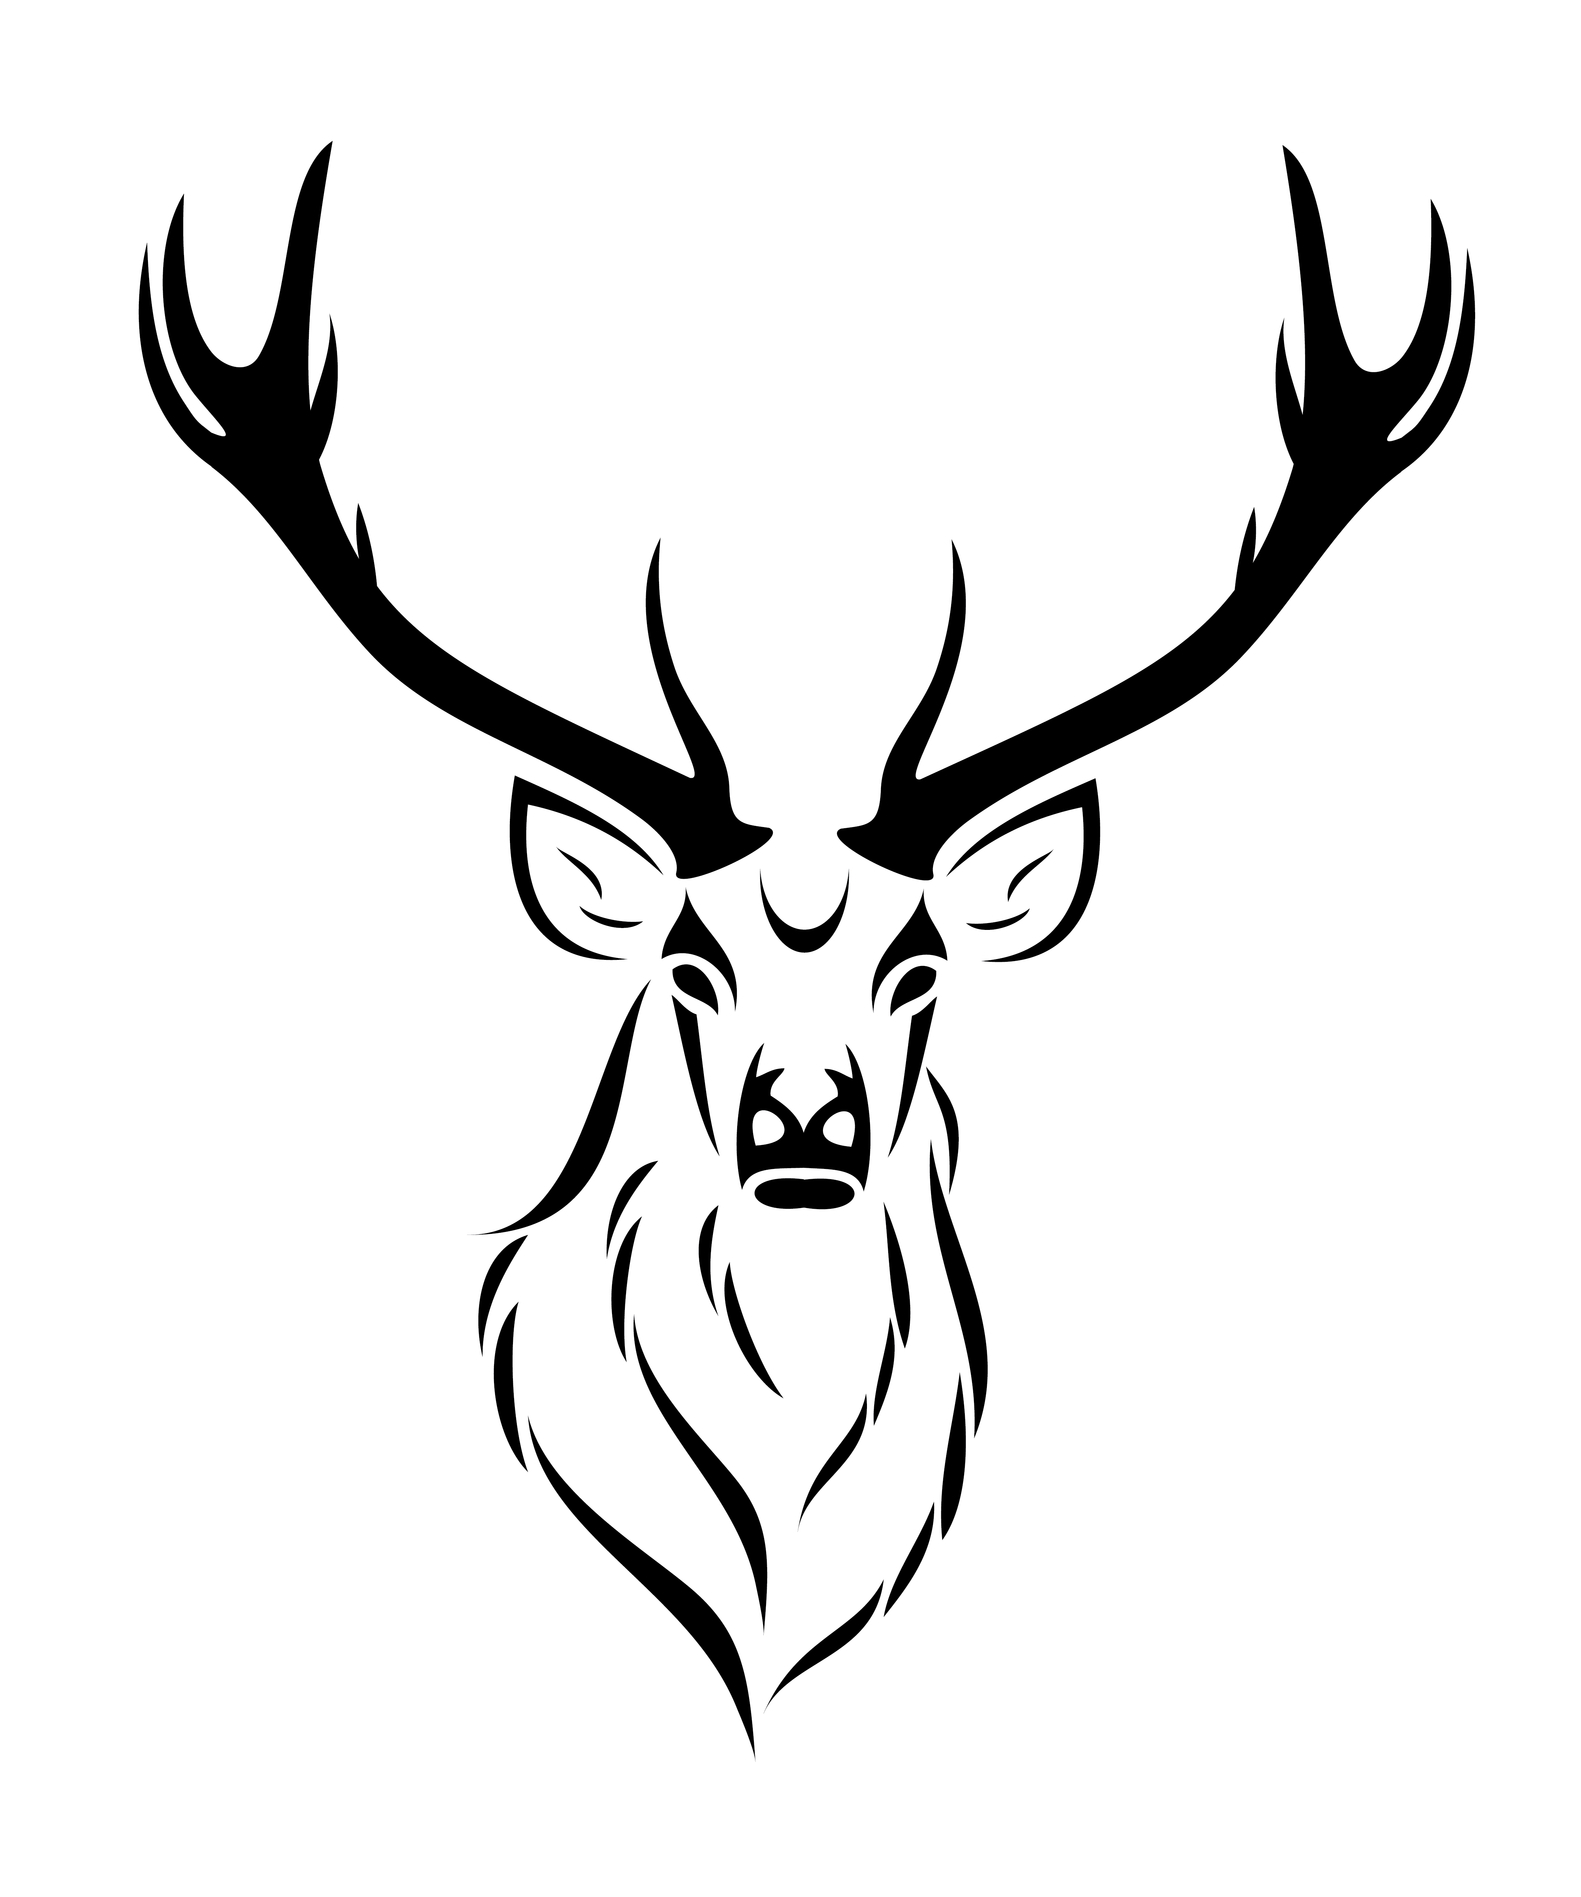 Deer Tattoo Images  Free Download on Freepik